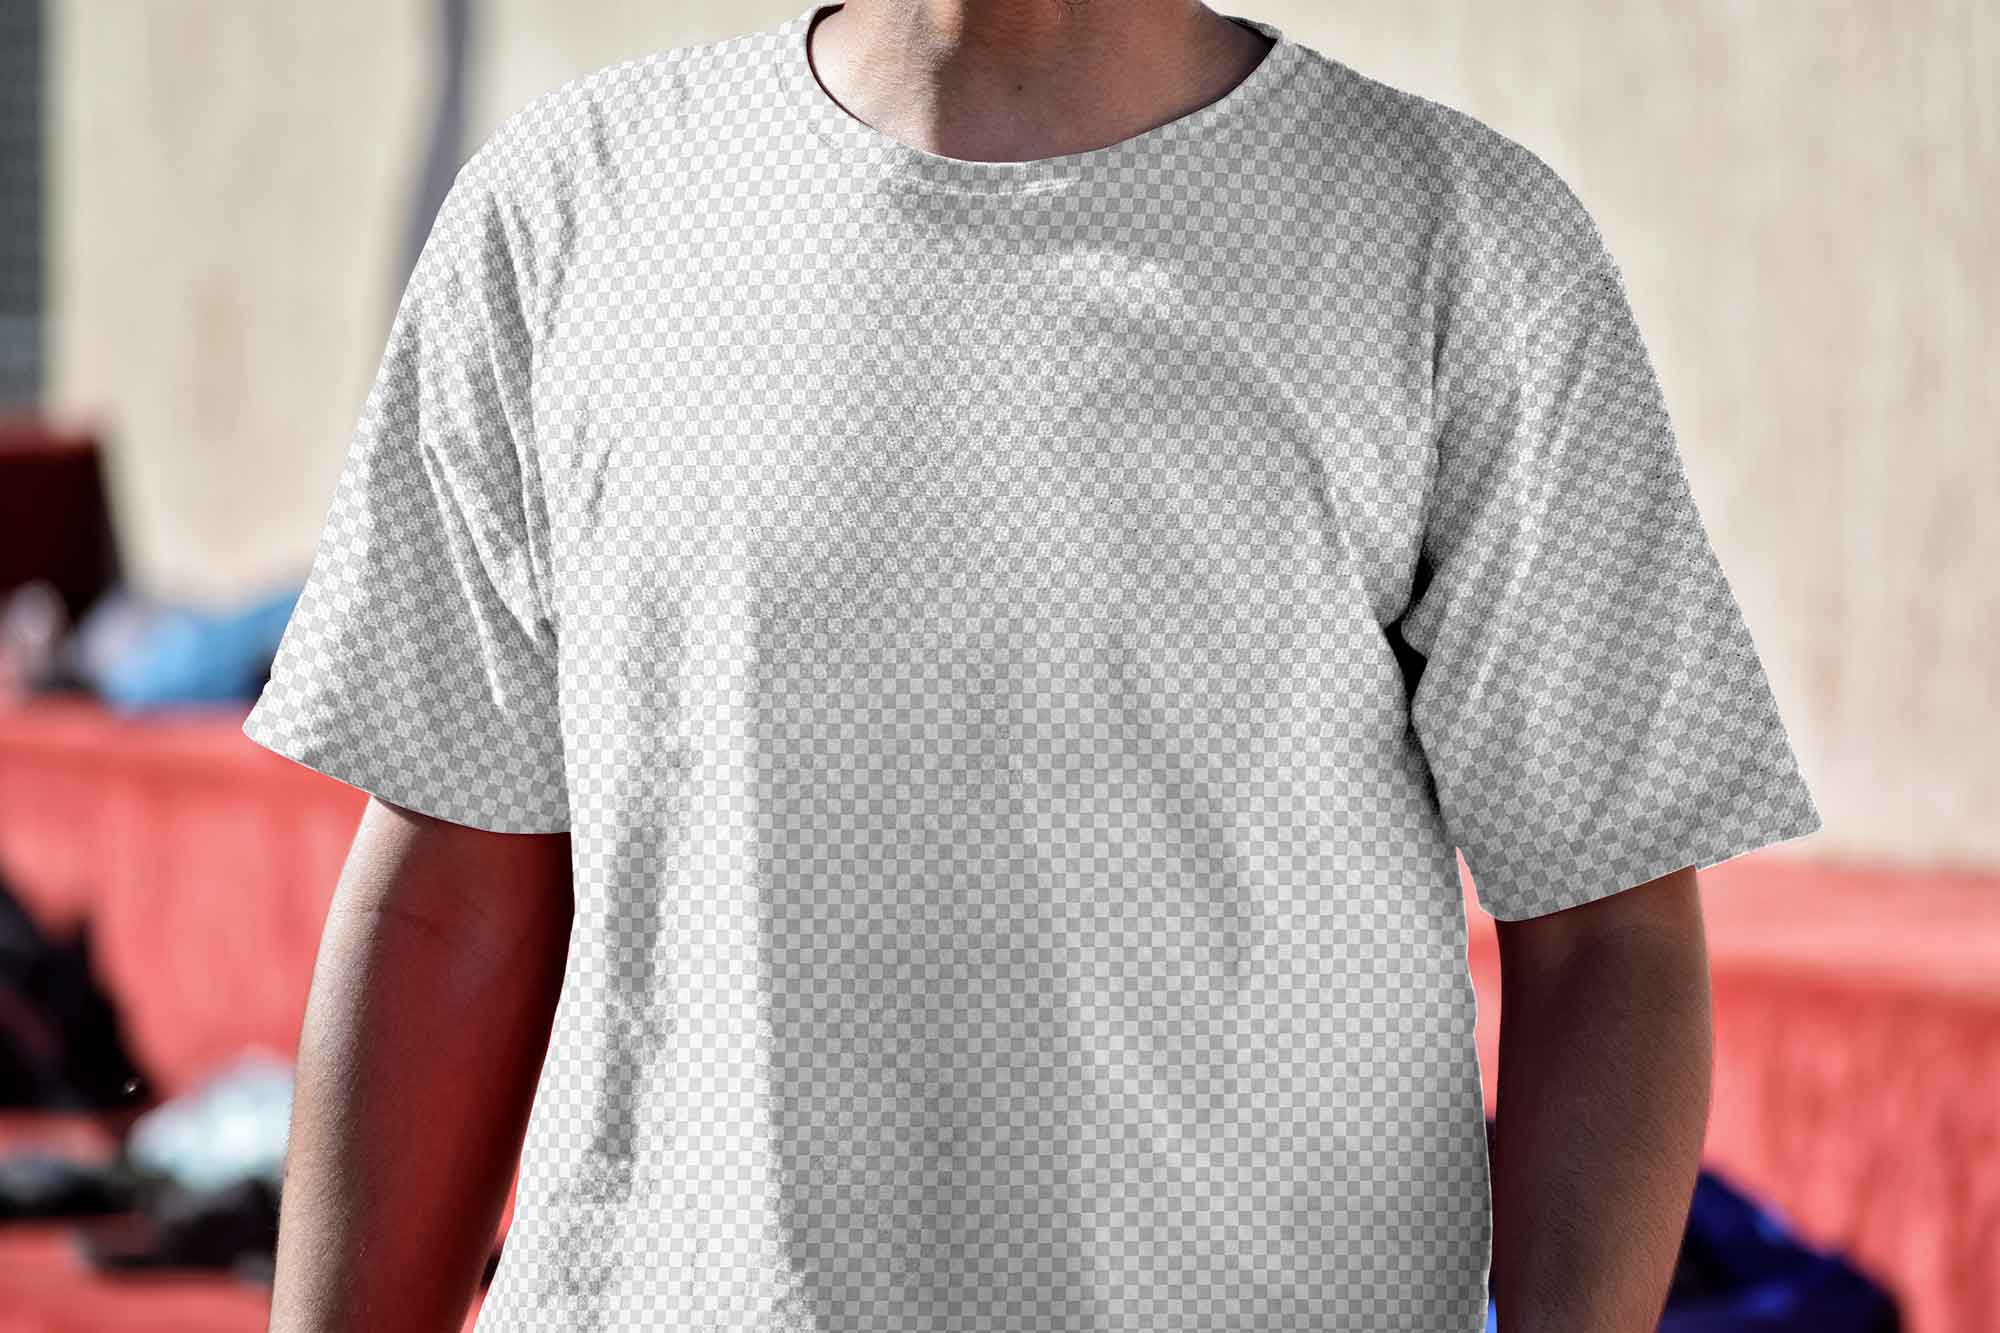  Textured T-shirt Mockup